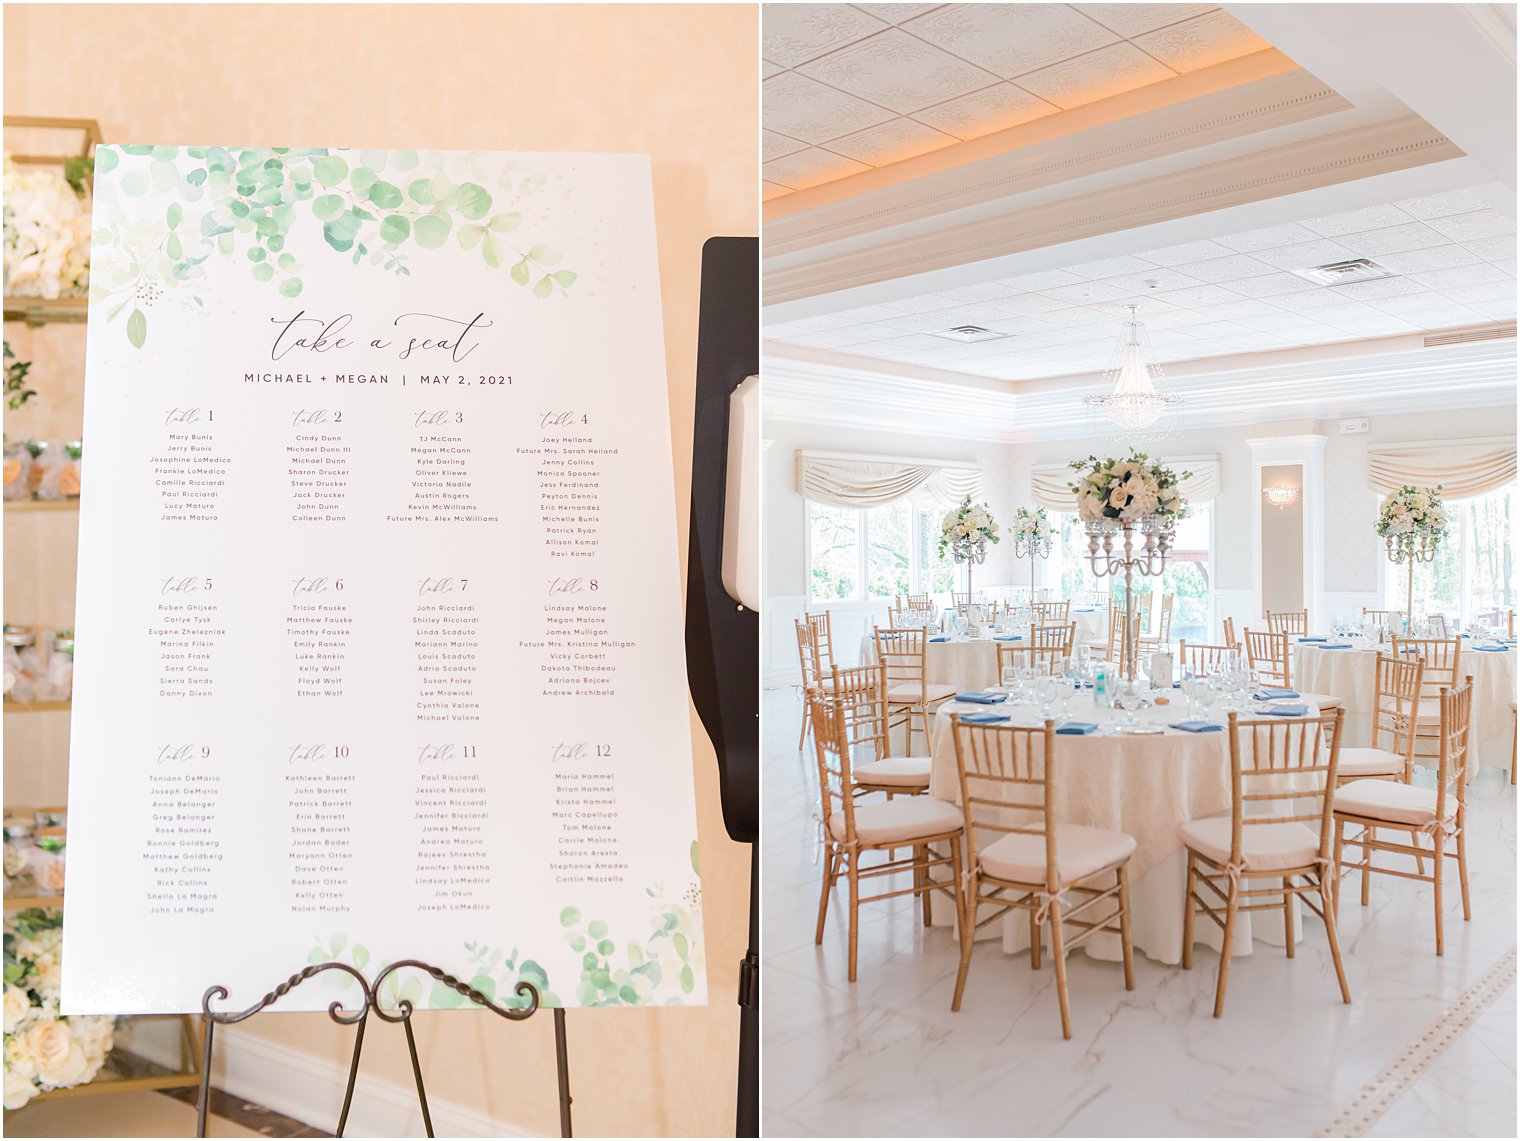 seating chart for ballroom wedding reception at The English Manor